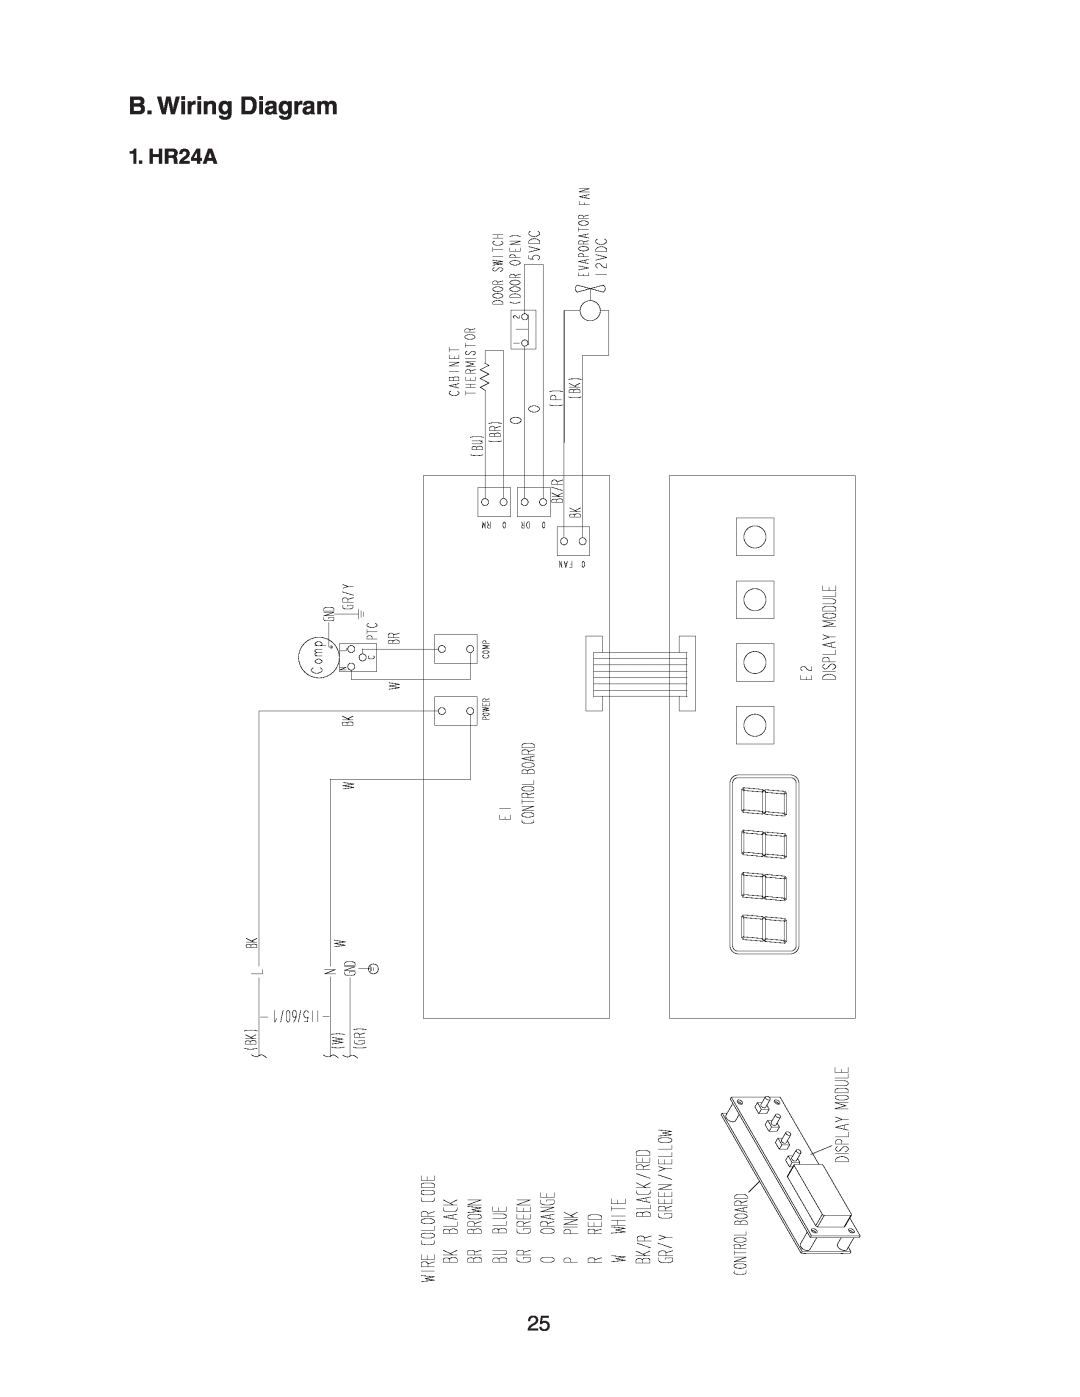 Hoshizaki service manual B. Wiring Diagram, 1. HR24A 